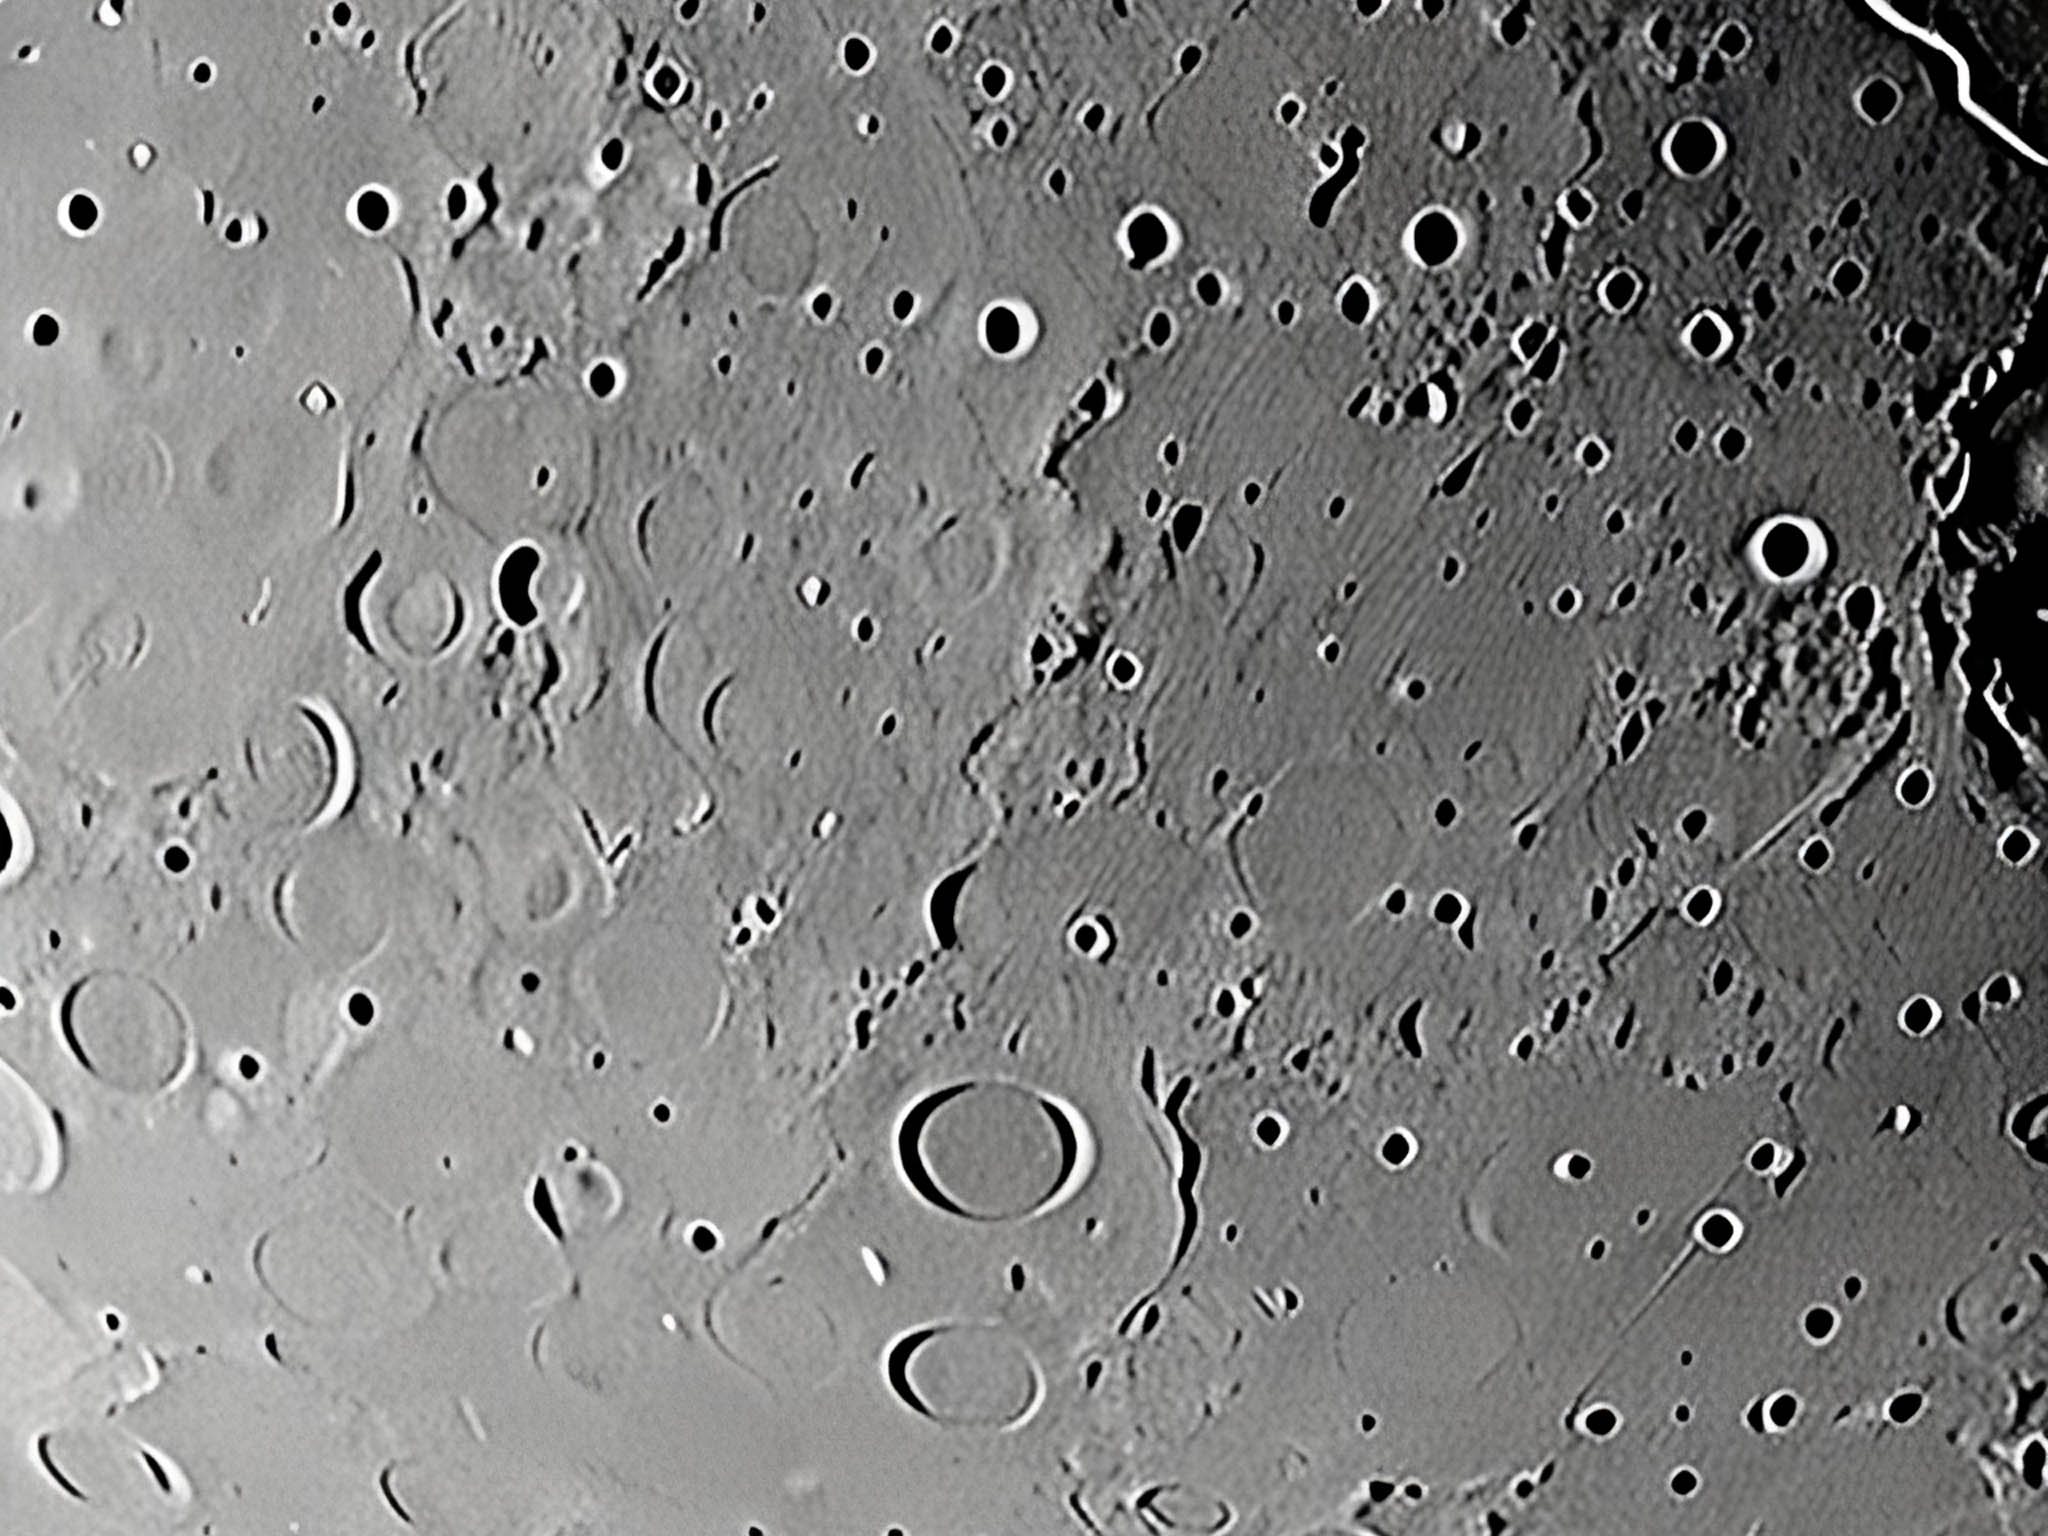 Close-up surface of Mercury